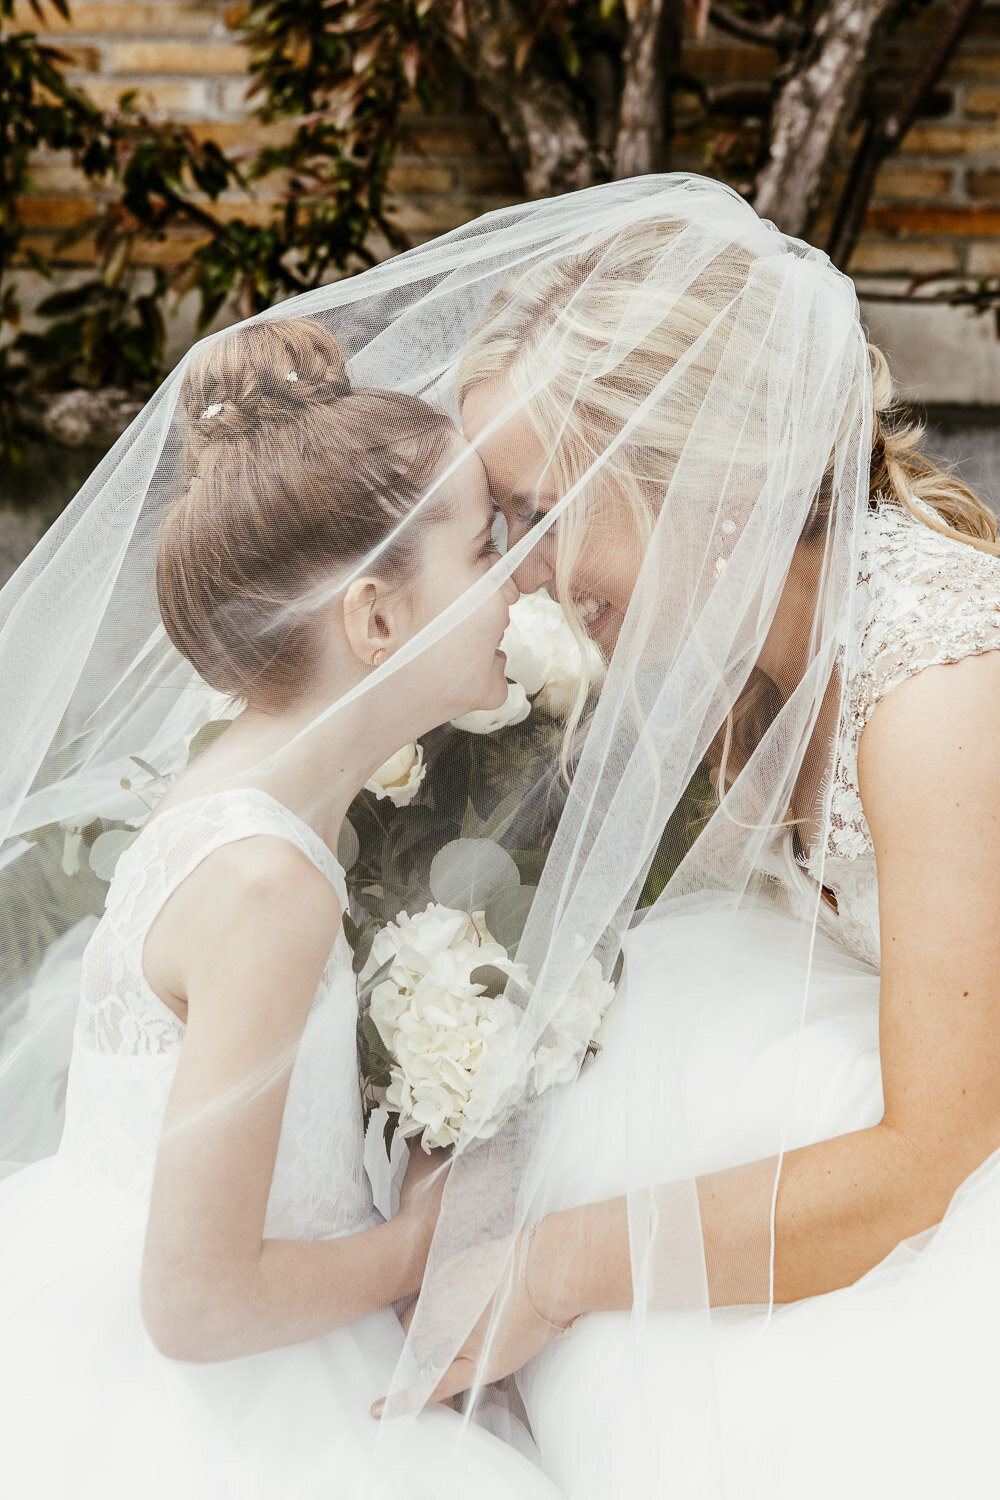 Bride and flower girl under wedding veil in Buffalo, New York